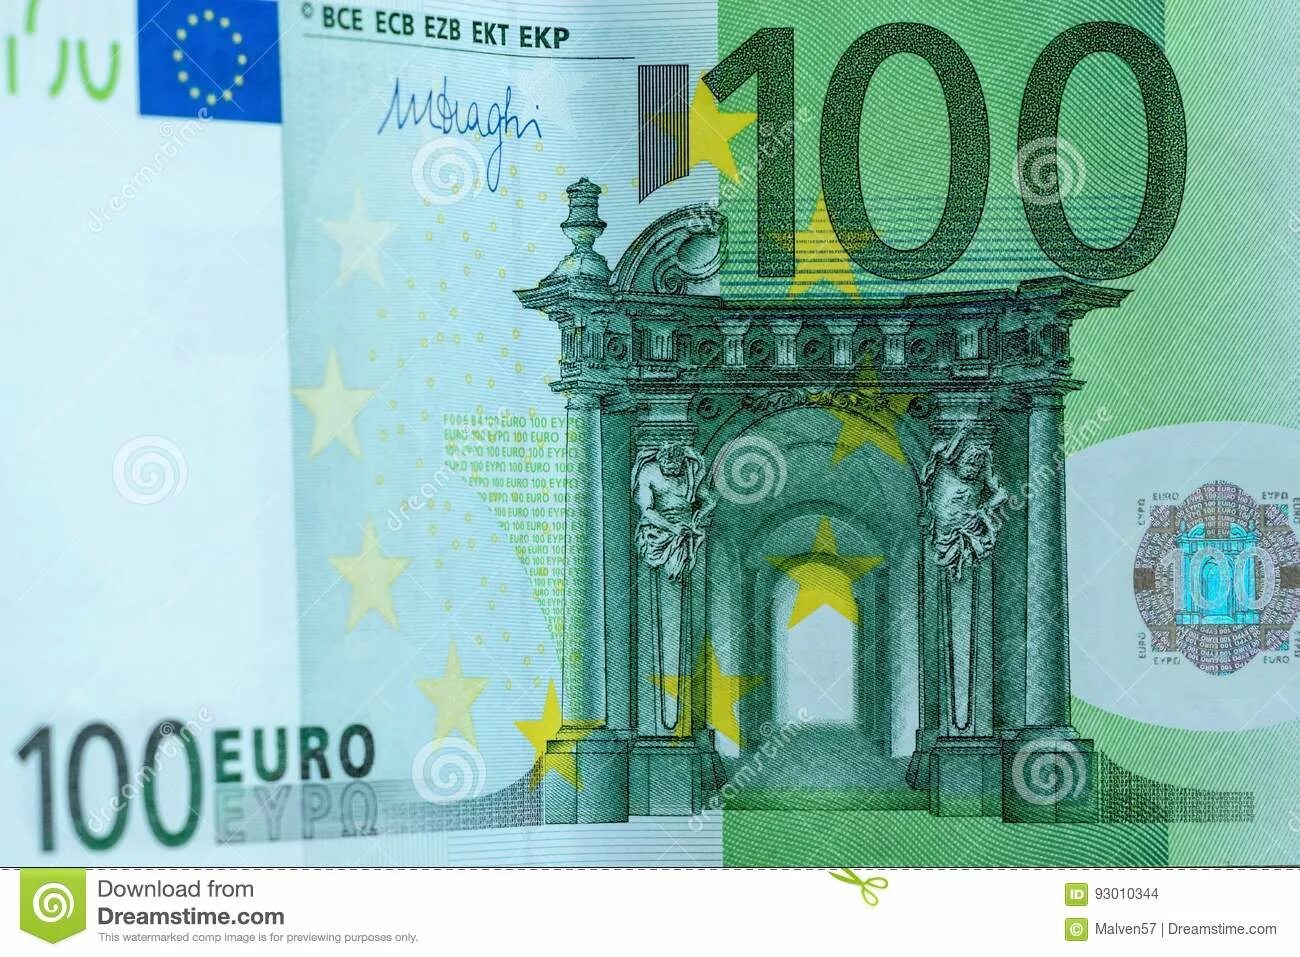 Тысяча евро в долларах. 100 Евро купюра. 100 Евро купюра в Германии. 100 Евро фото. СТО евро картинка.